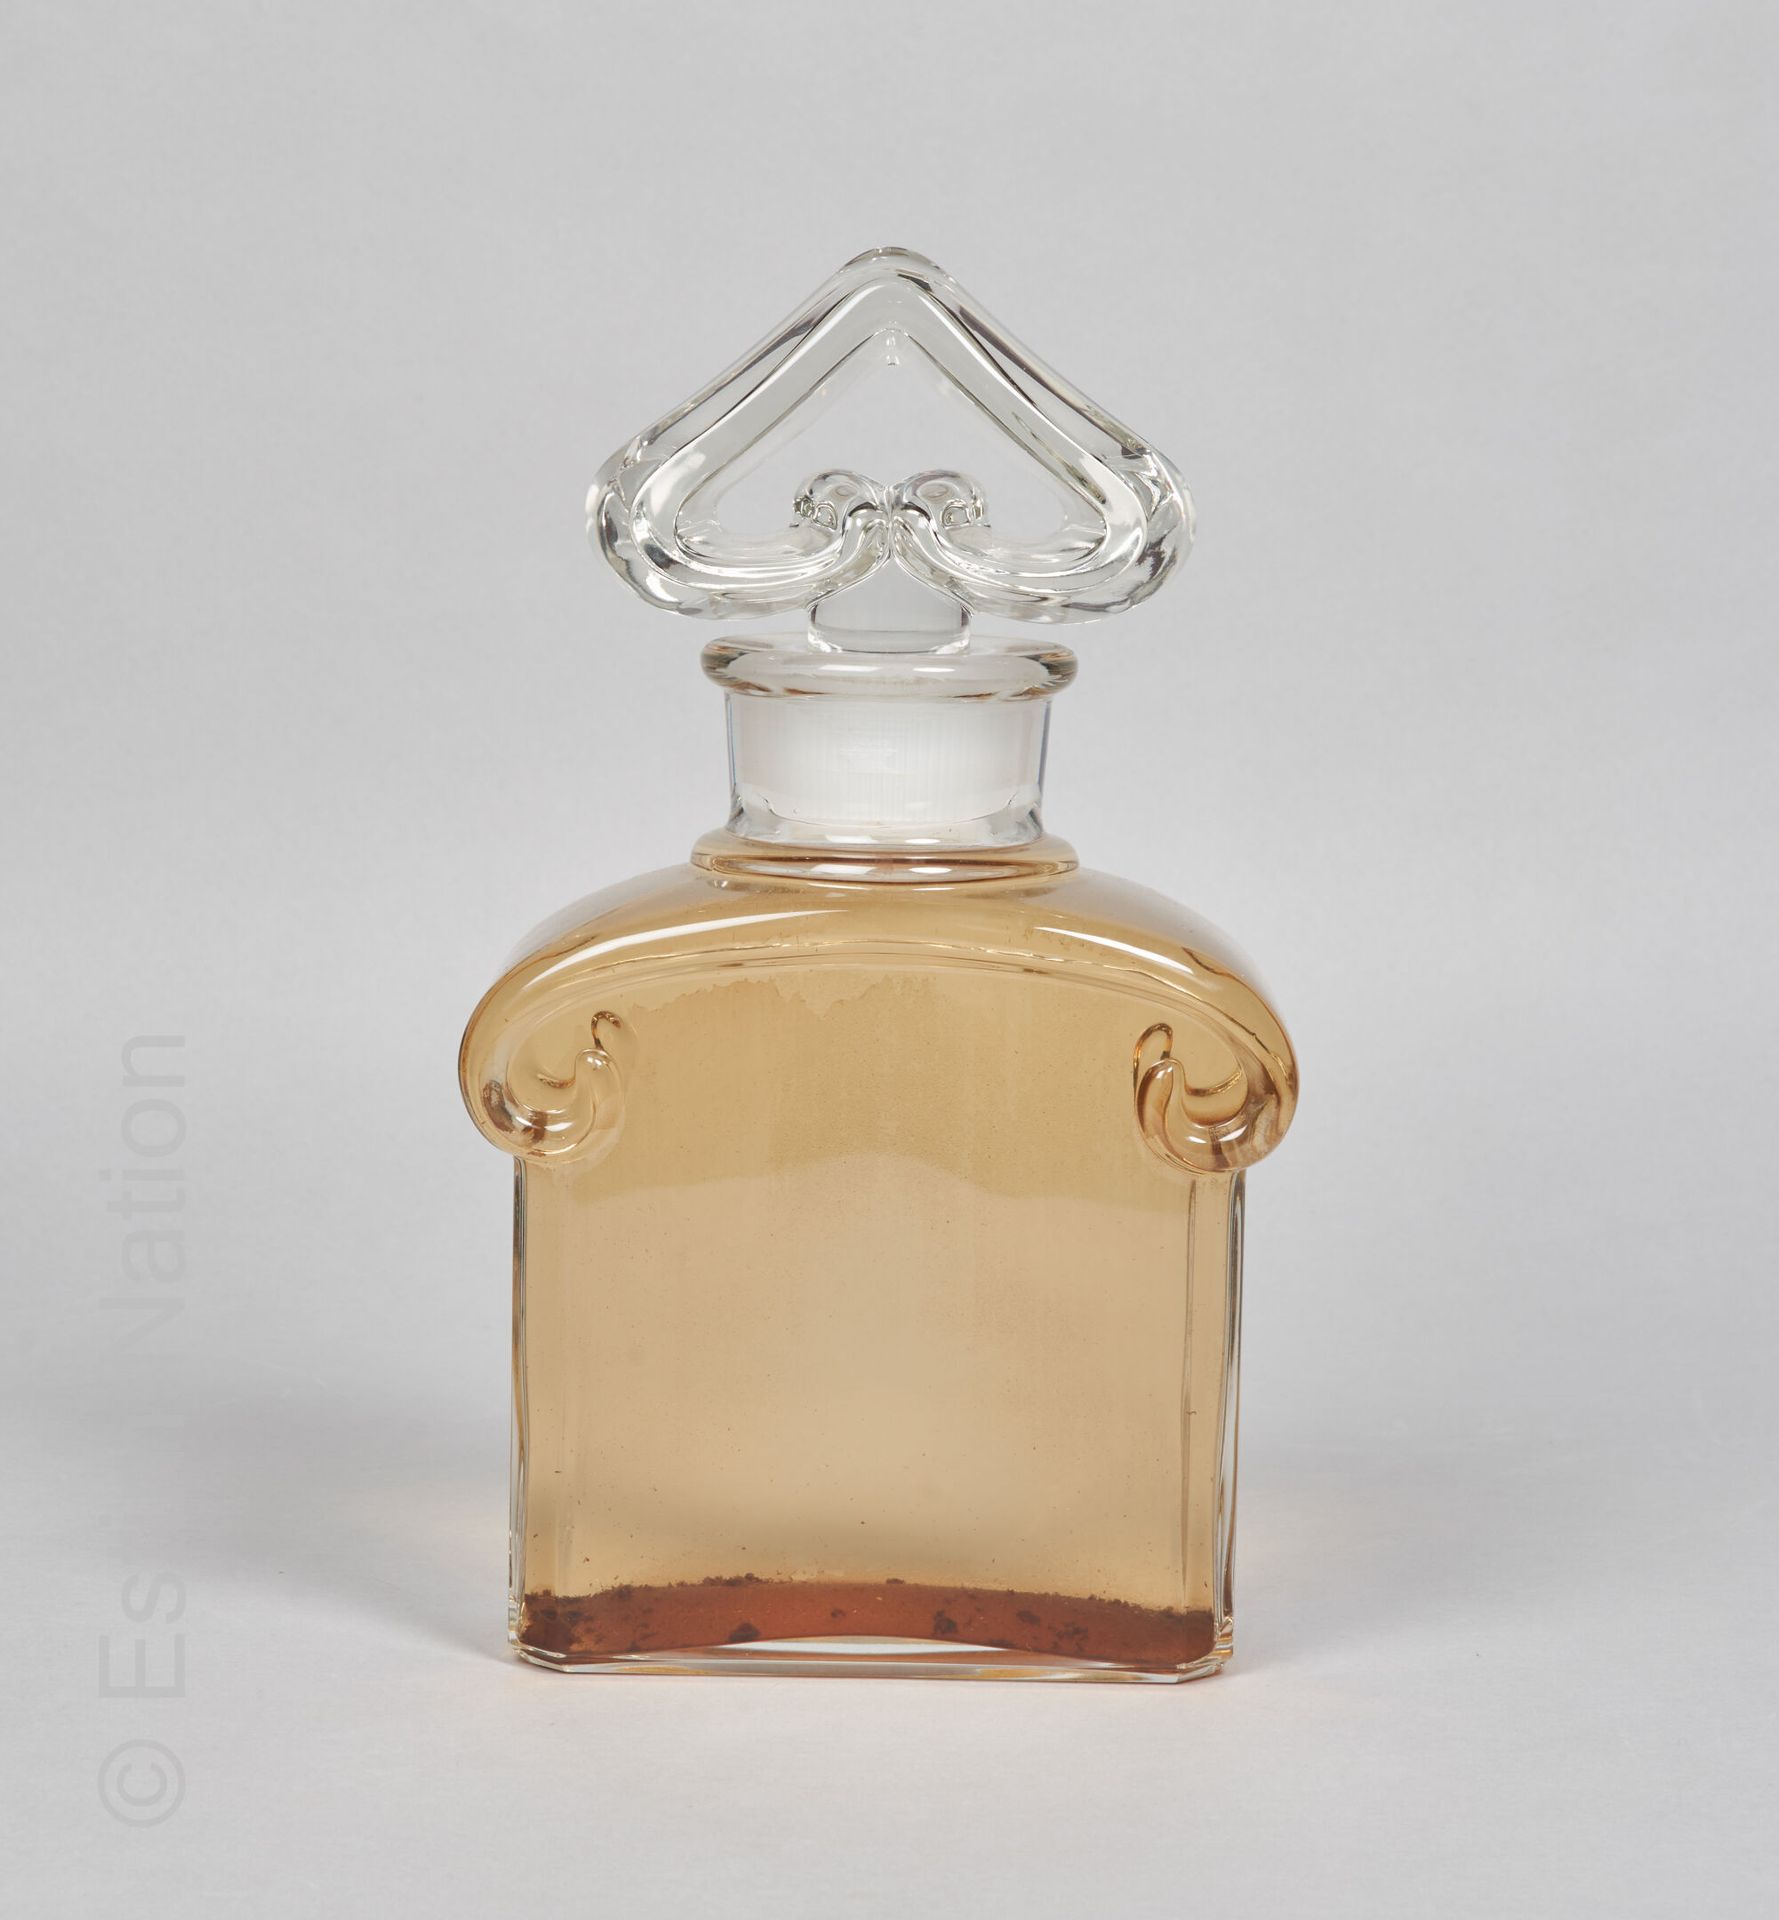 PARFUMS - GUERLAIN 巴黎格莱恩



大型模制玻璃瓶，型号为 "Quatre volutes"，瓶塞模拟一个倒置的心脏。

签名在脚下成型。
&hellip;